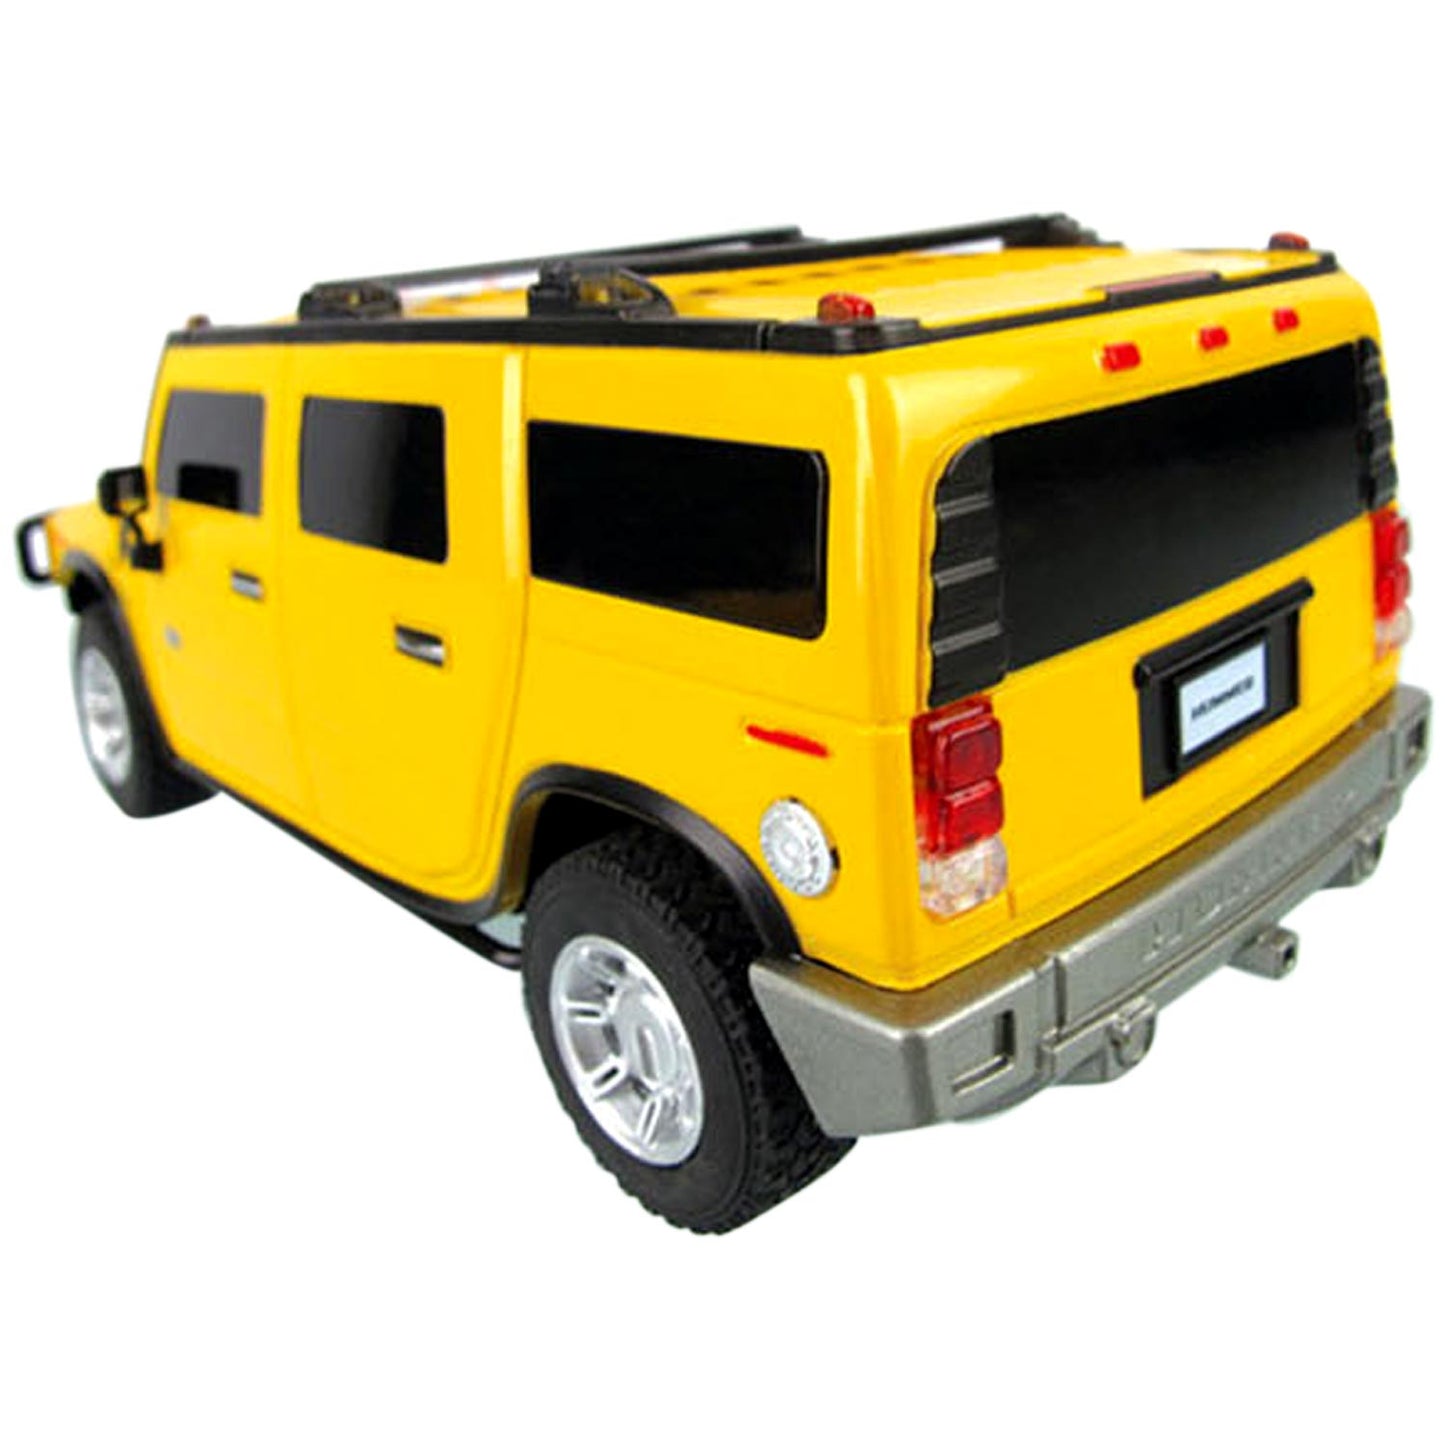 Hummer H2 SUV~Yellow